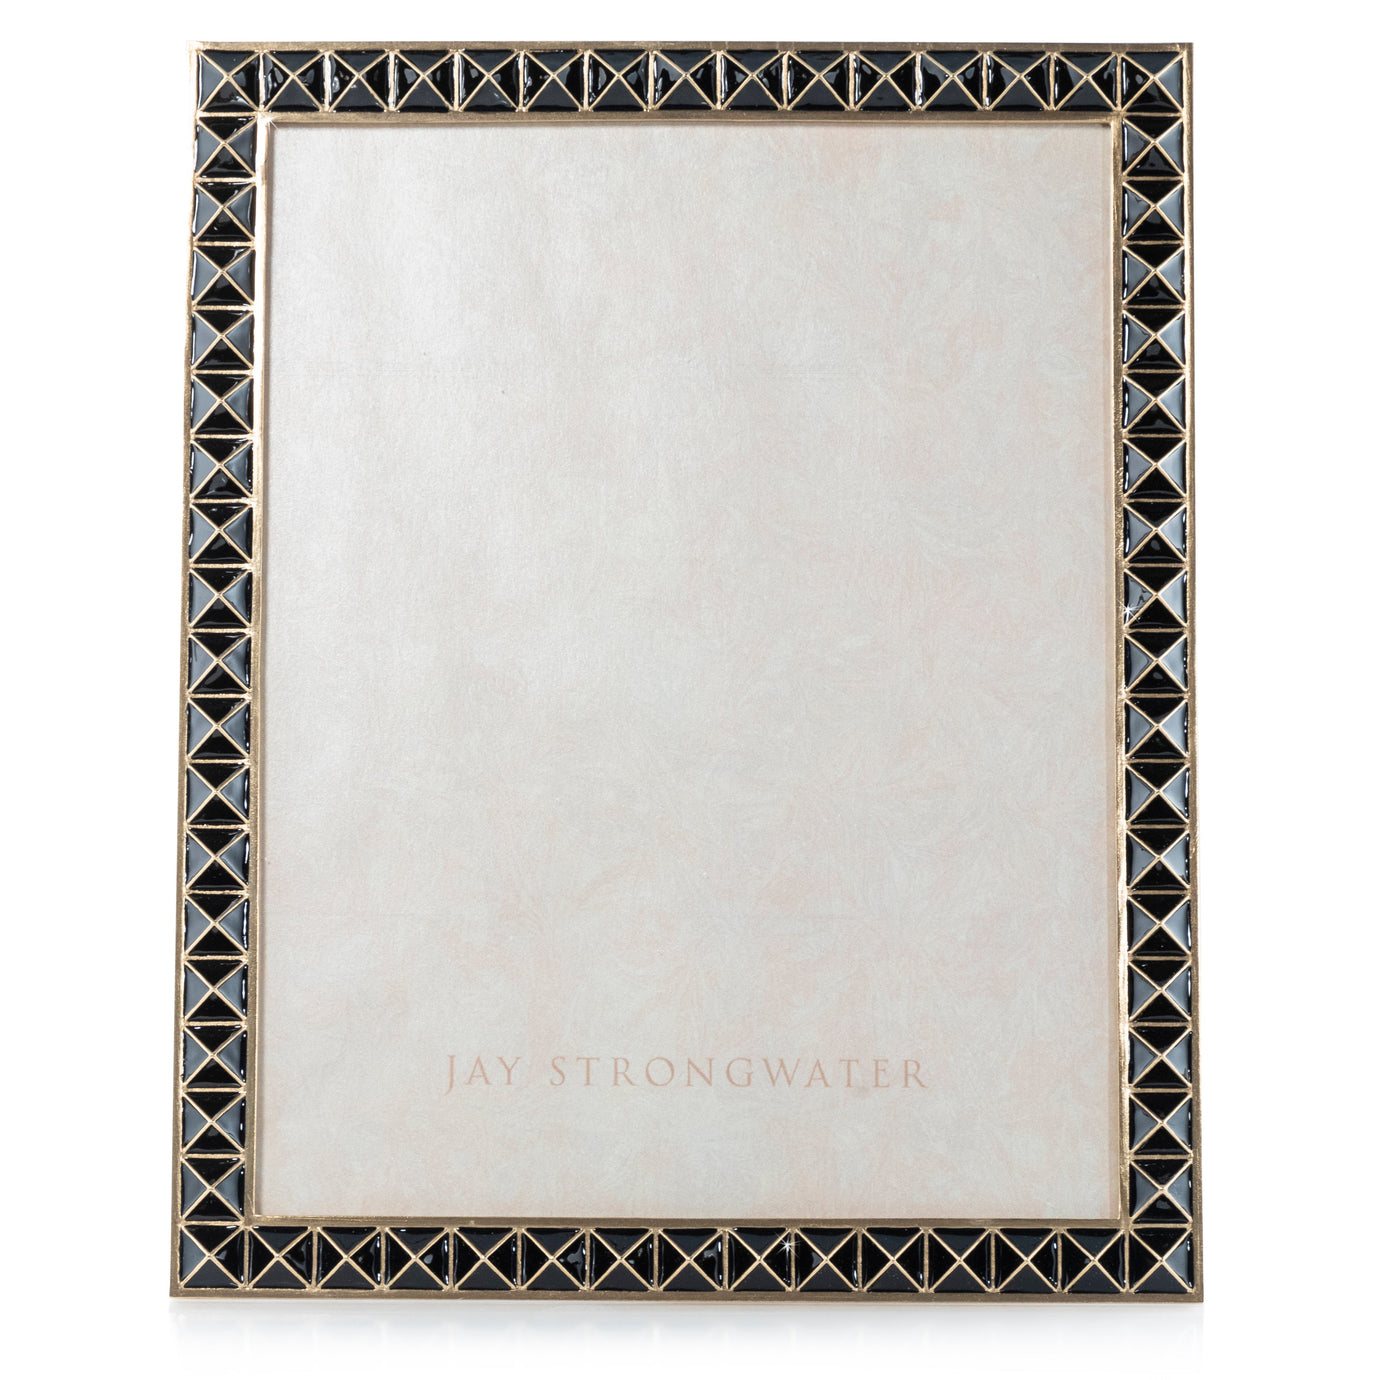 Jay Strongwater Vertex Pyramid 8" x 10" Frame - Black Onyx.